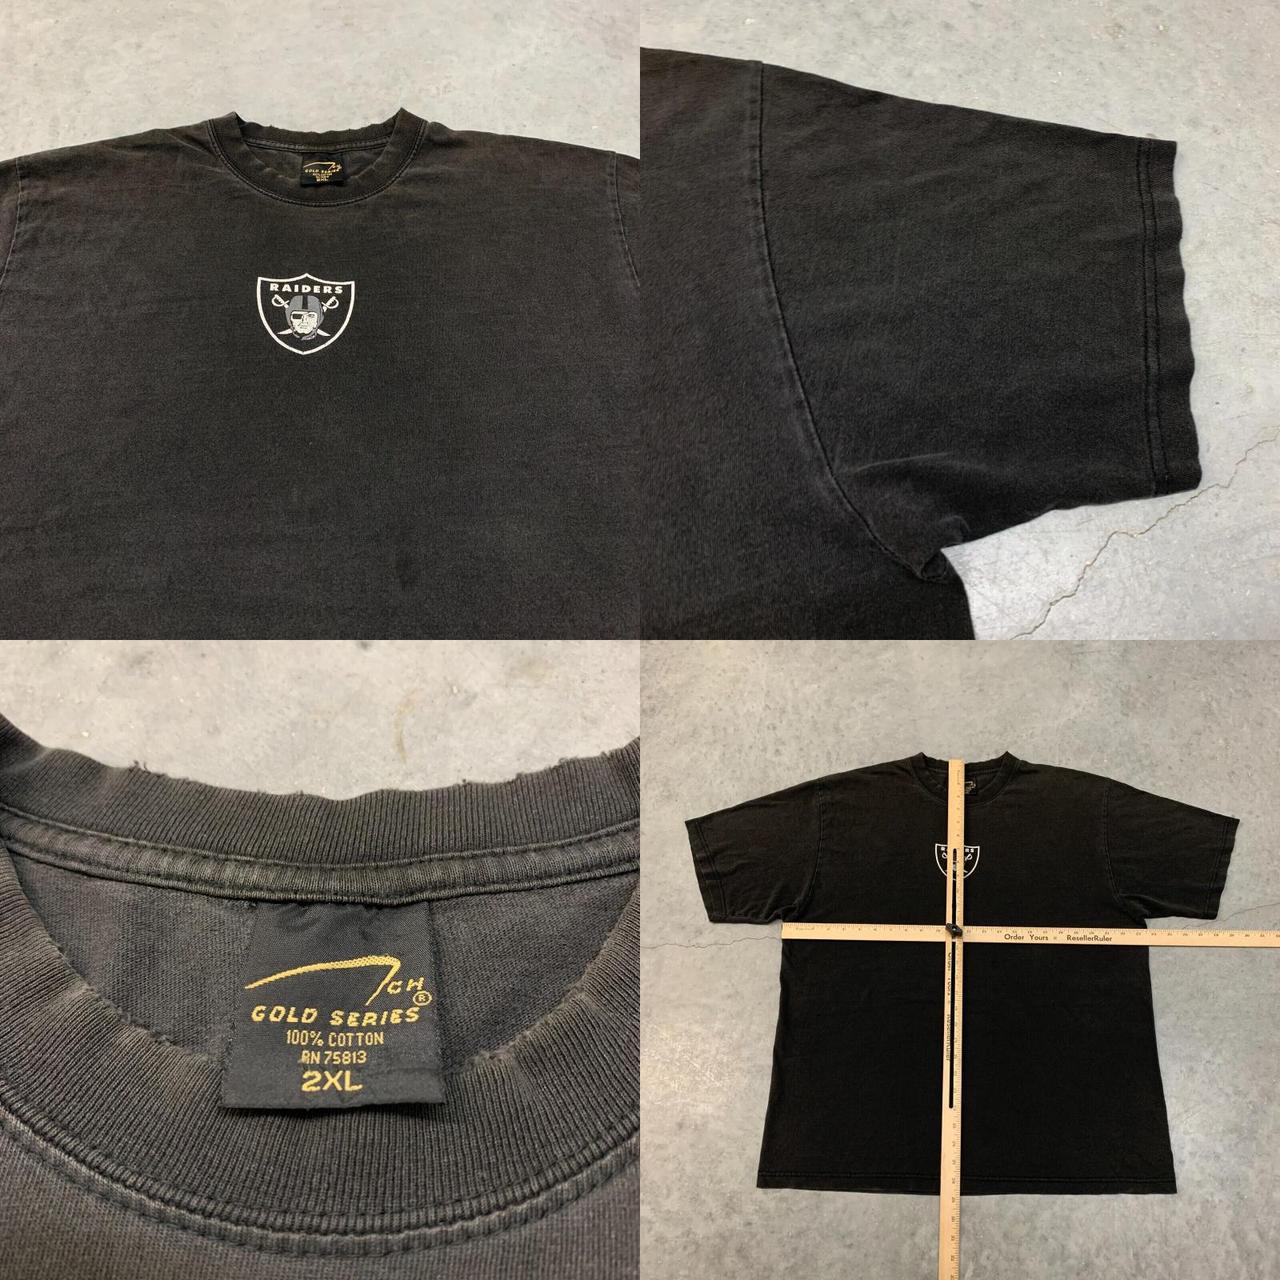 Product Image 4 - Vintage Oakland Raiders Shirt Adult